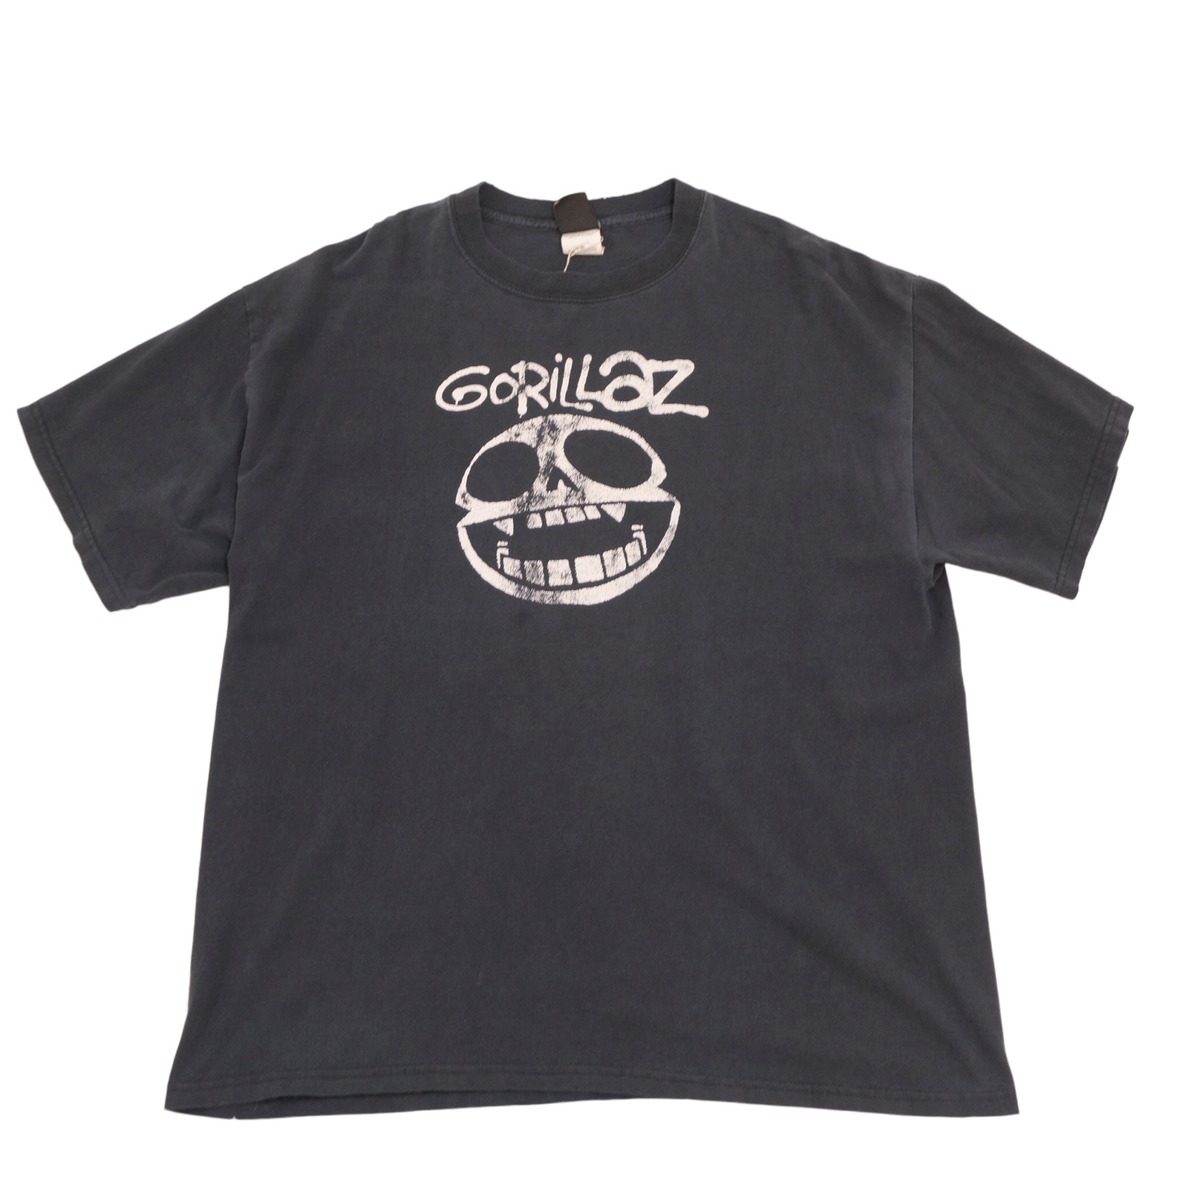 00s GORILLAZ “Skull” Vintage Band T-shirt | BEATNIK